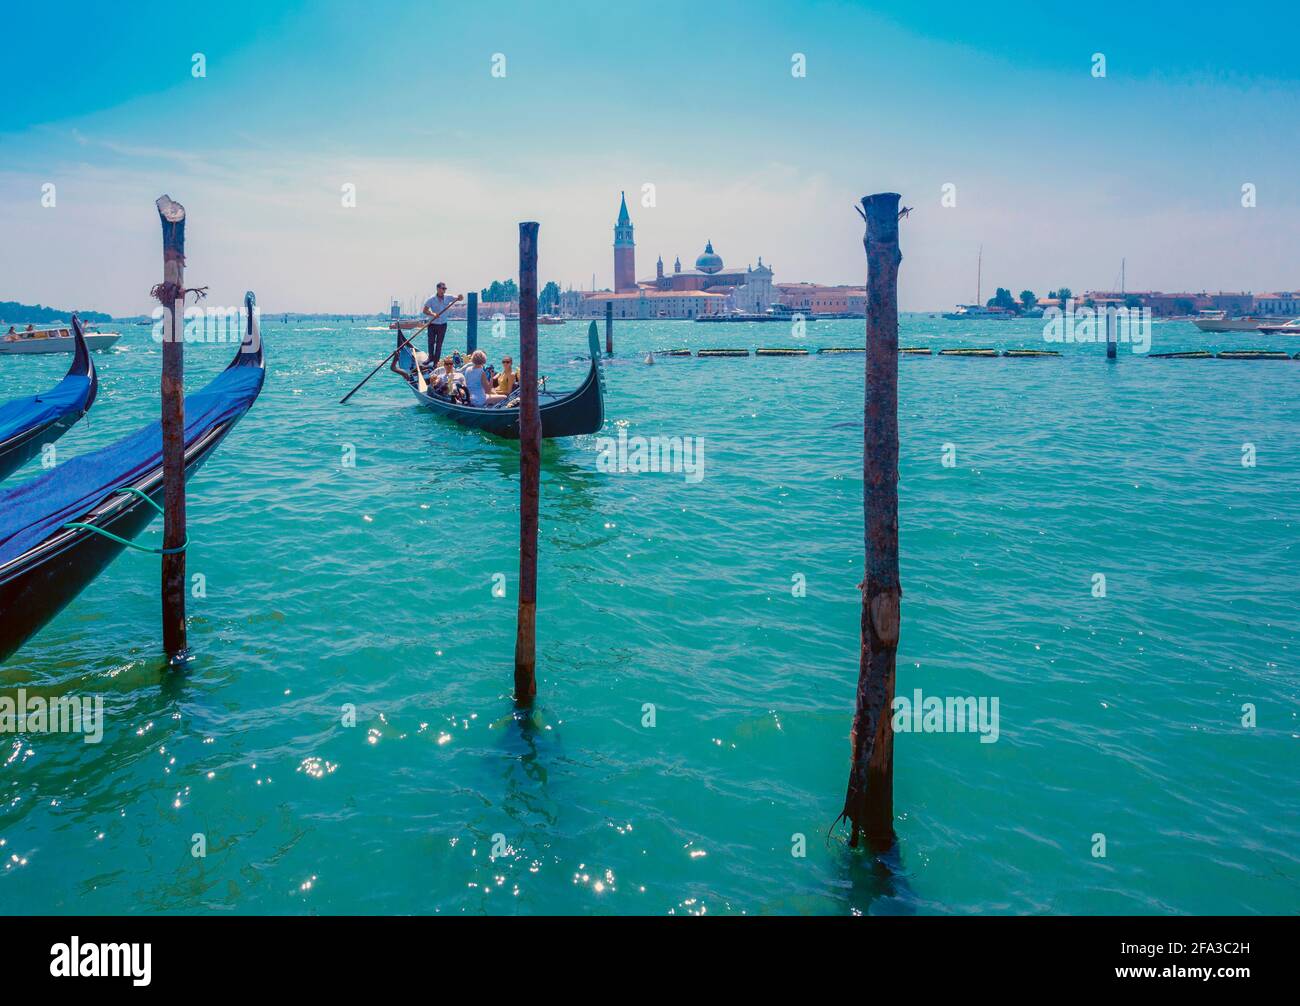 Venedig, Provinz Venedig, Region Venetien, Italien. Gondeln im Bacino di San Marco. San Giorgio Maggiore dahinter. Venedig und seine Lagune sind ein UNESCO W Stockfoto